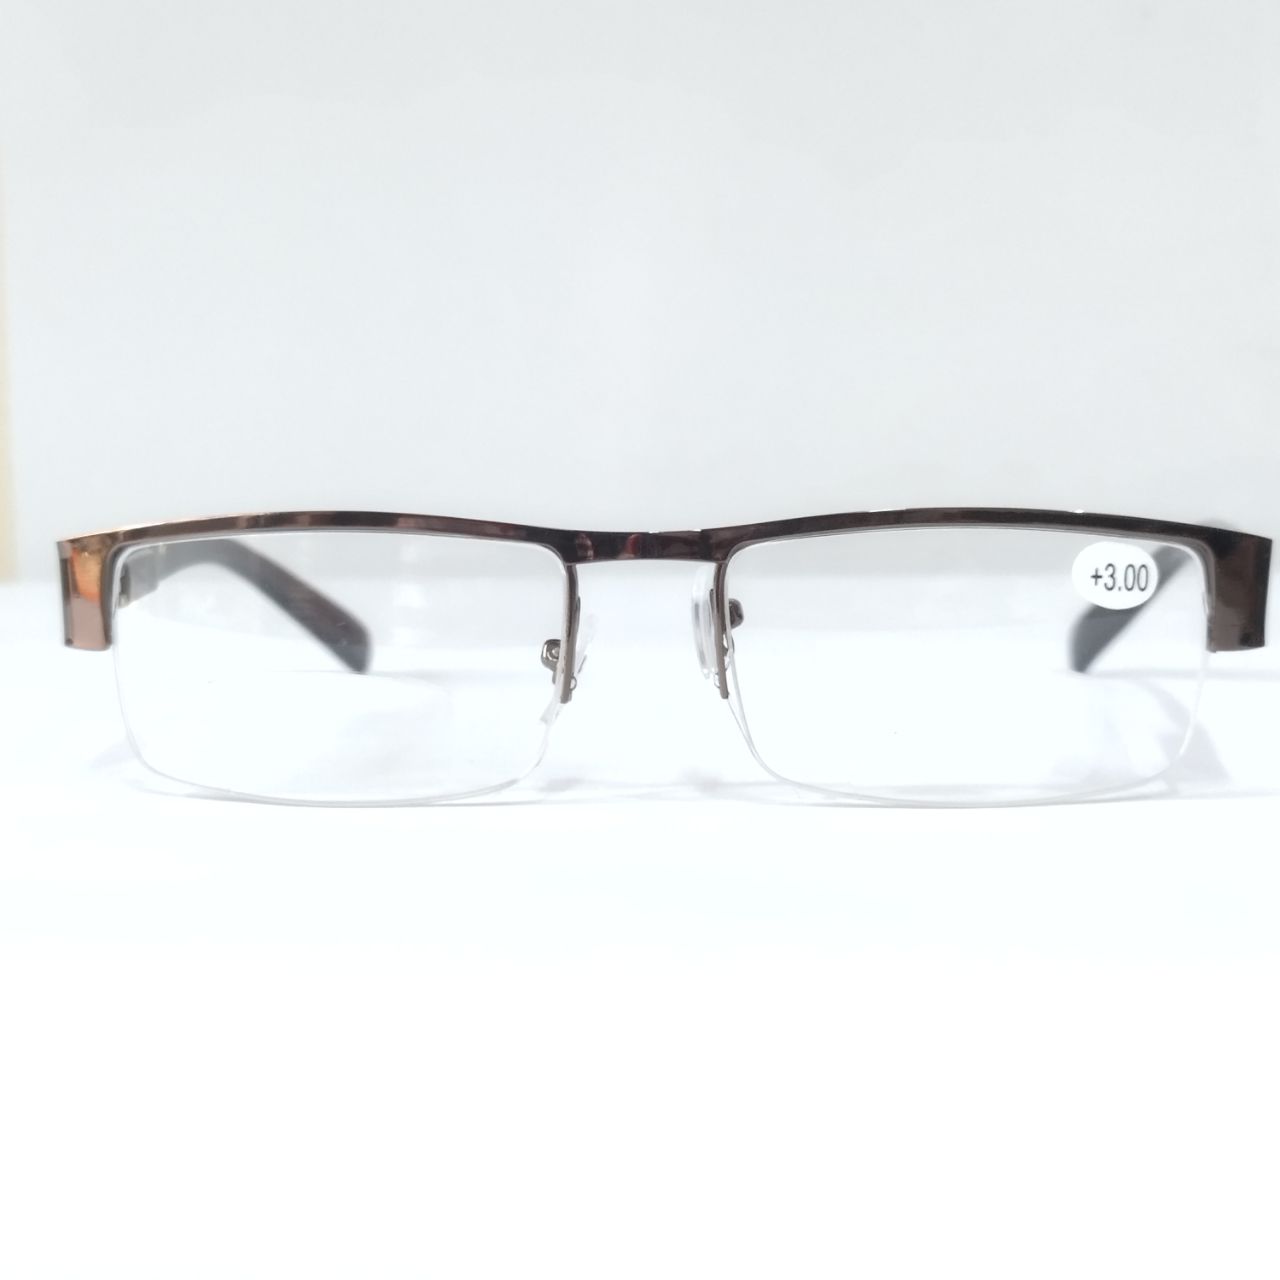 Copper Supra D Bifocal Reading Glasses For Men and Women